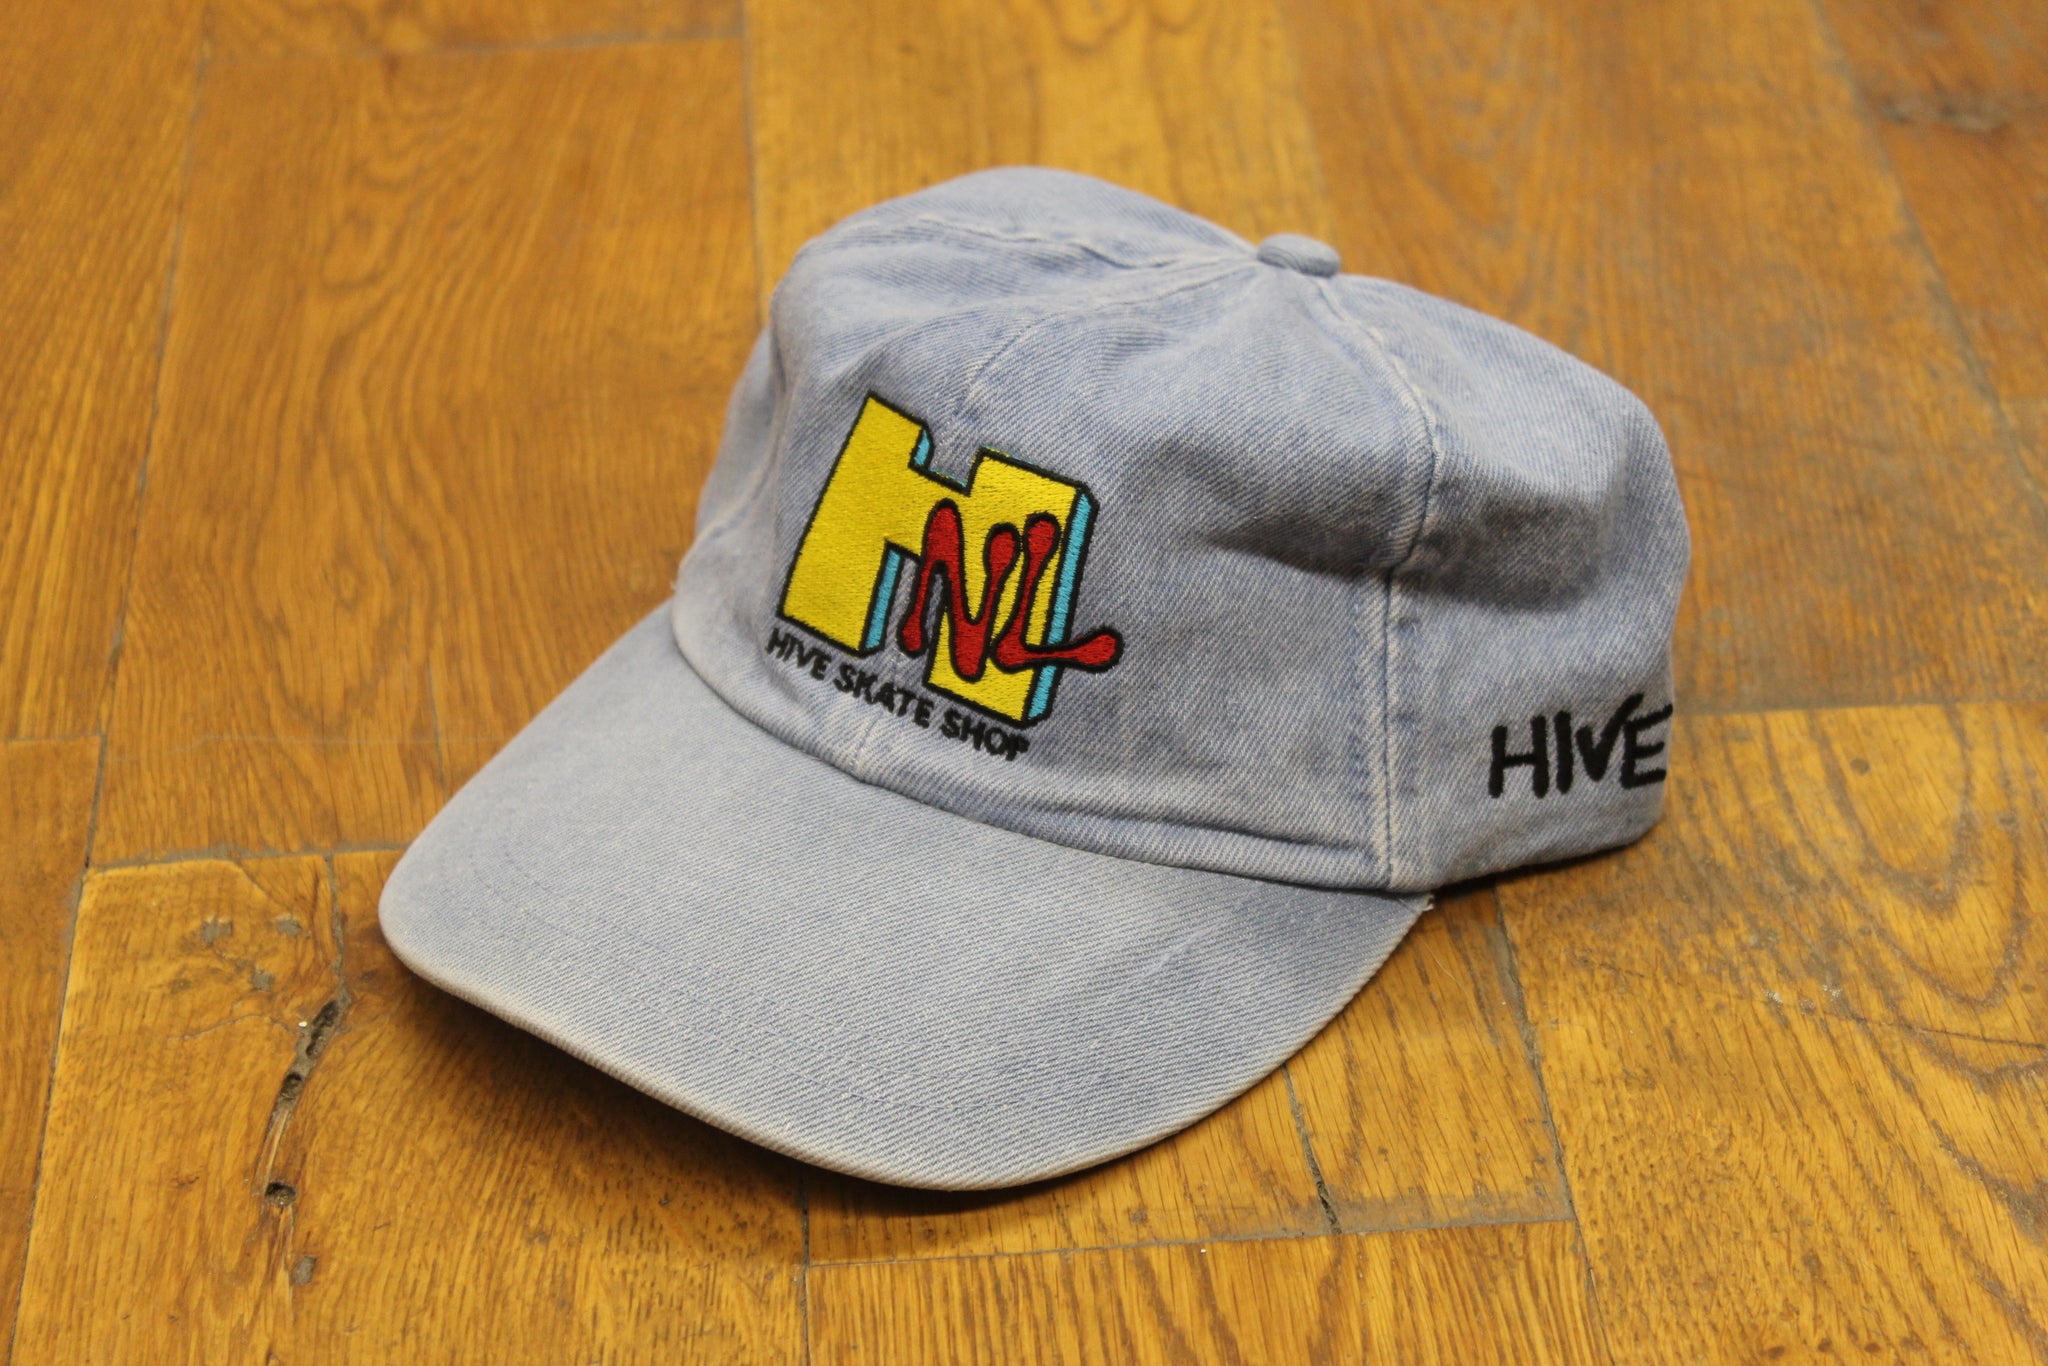 HIVE "HNL" Hats